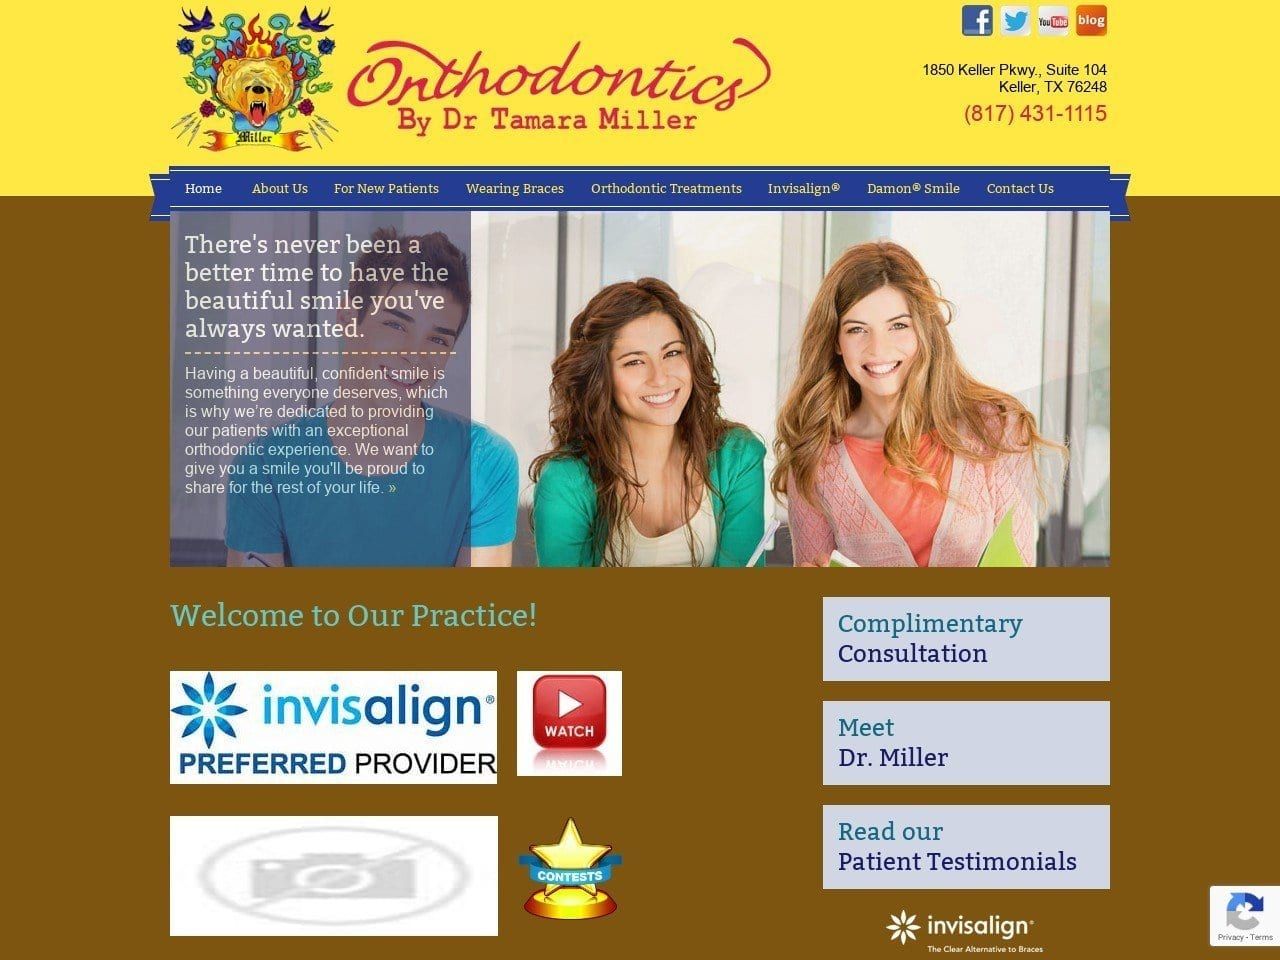 Dr. Tamara Miller Orthodontics Website Screenshot from drtamaramiller.com